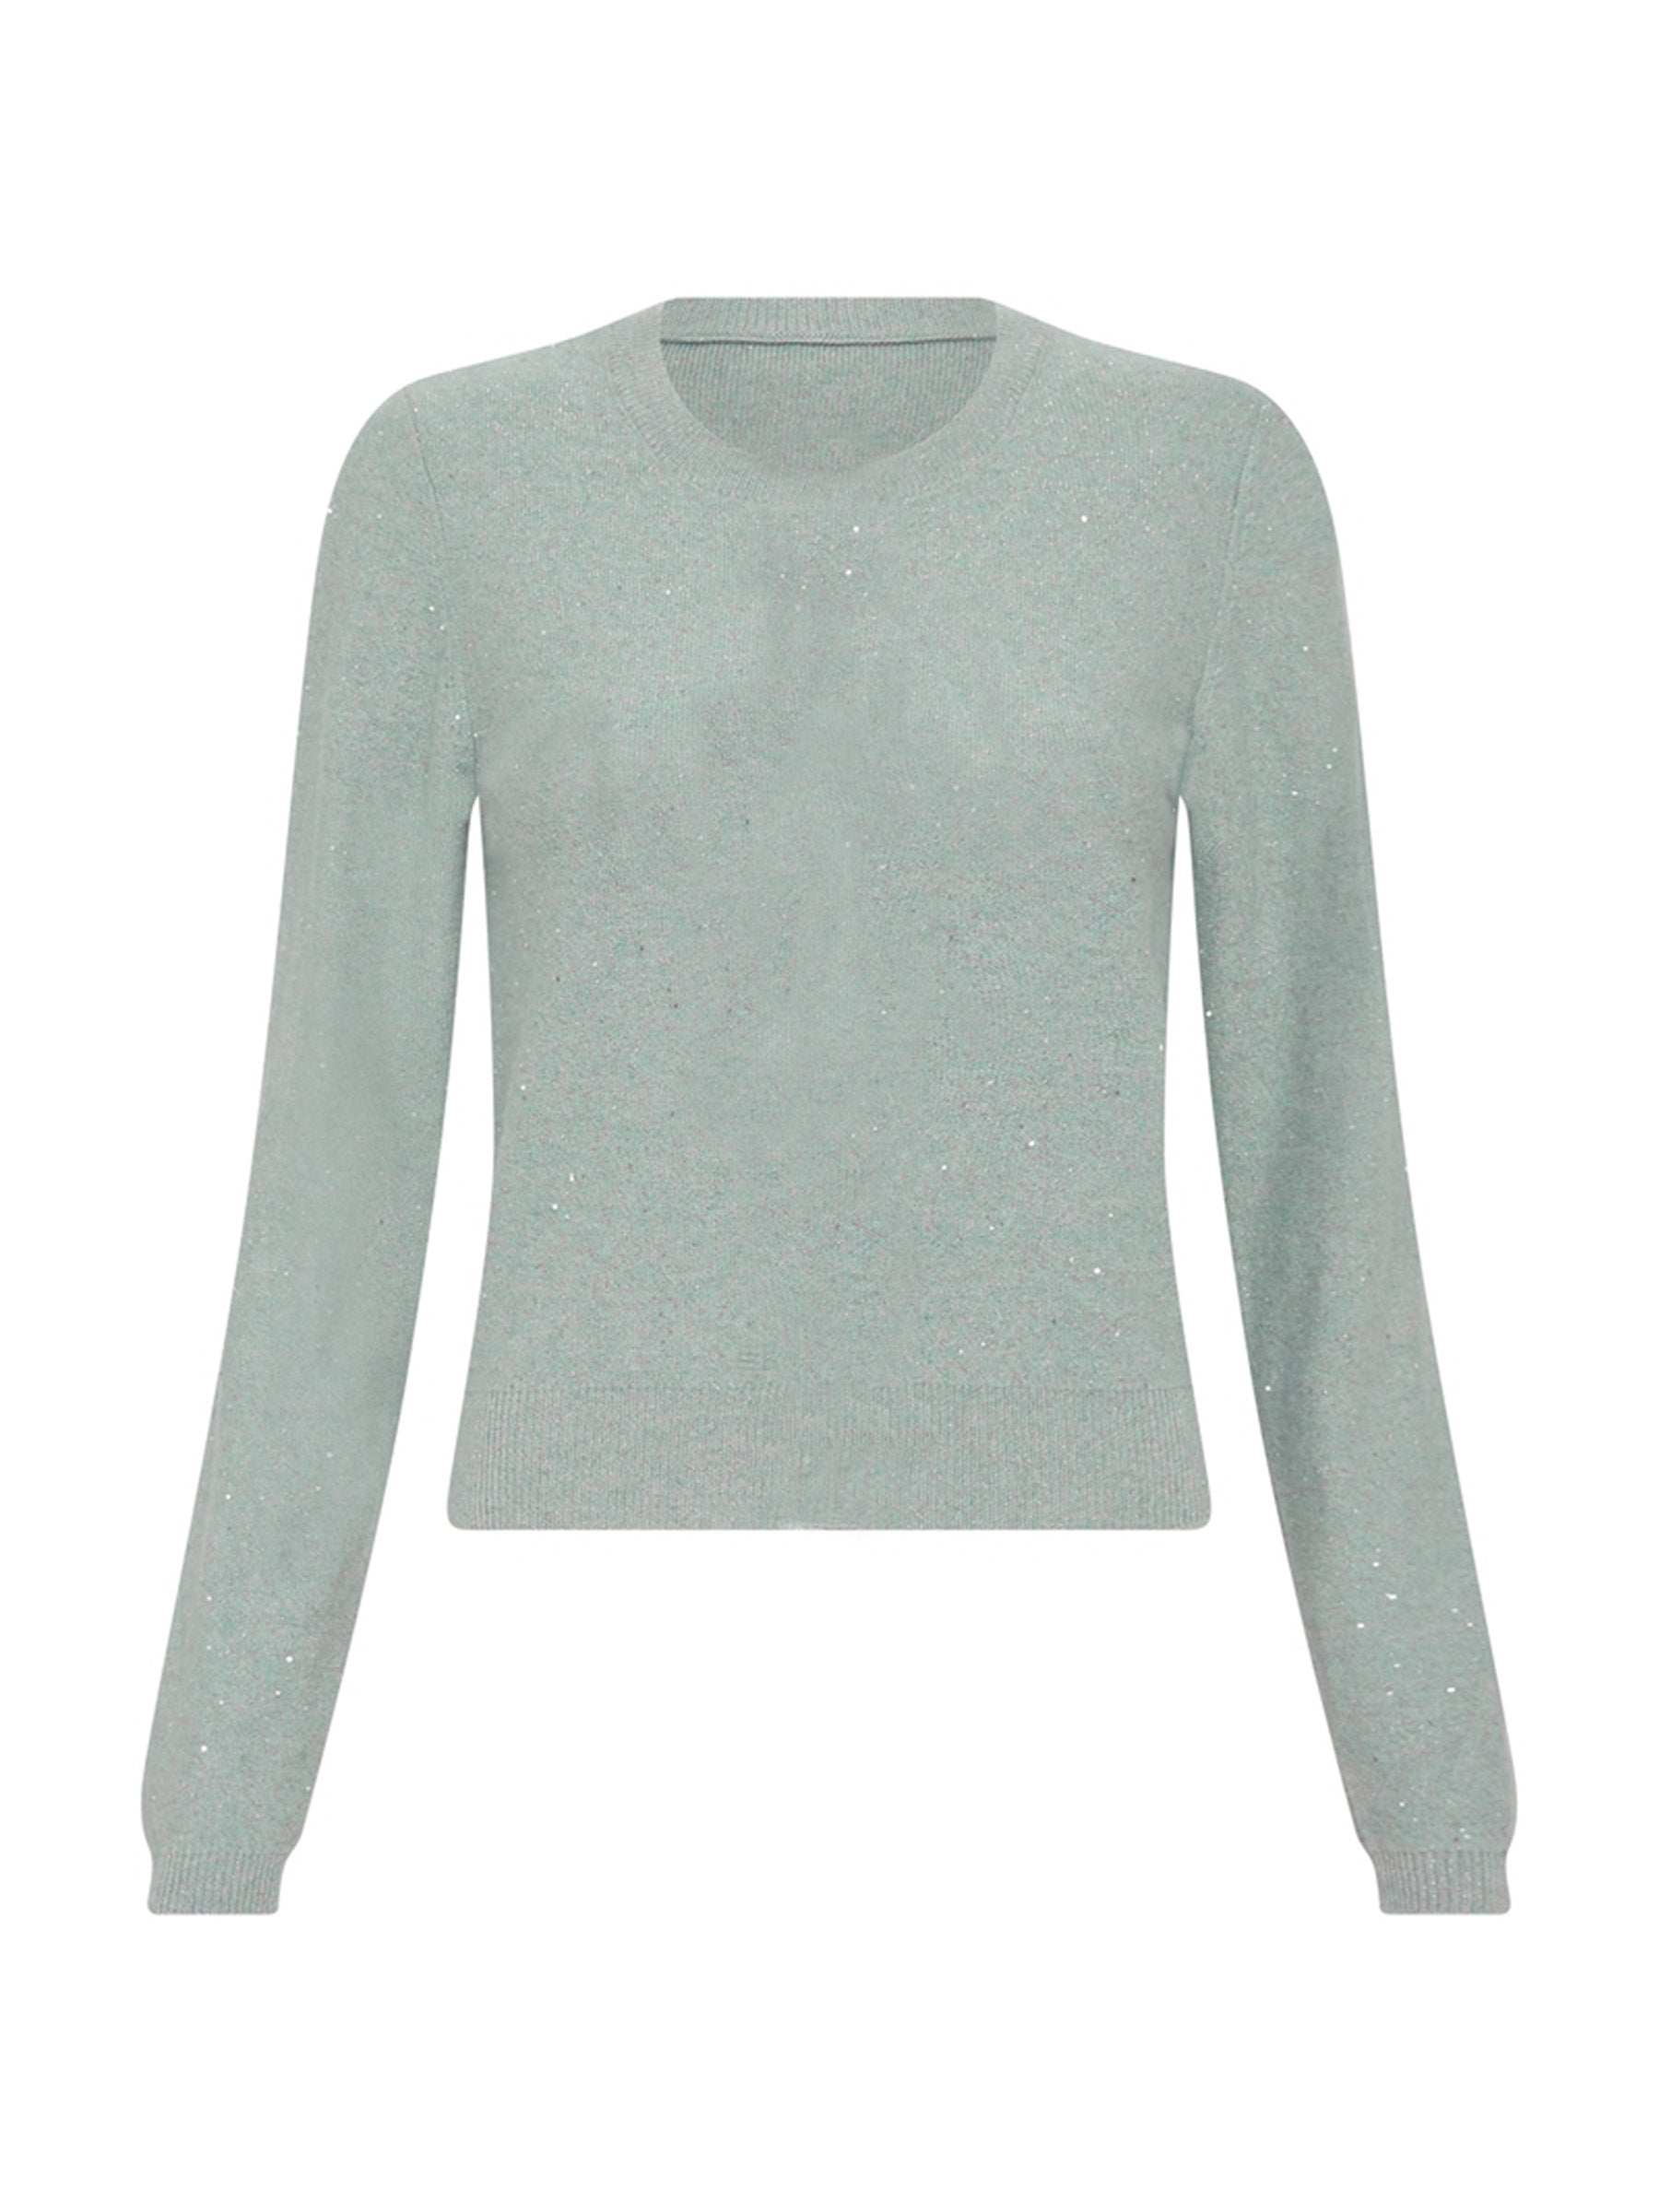 Sparkle Cashmere Sweater - Steel Blue (Size Medium Only)